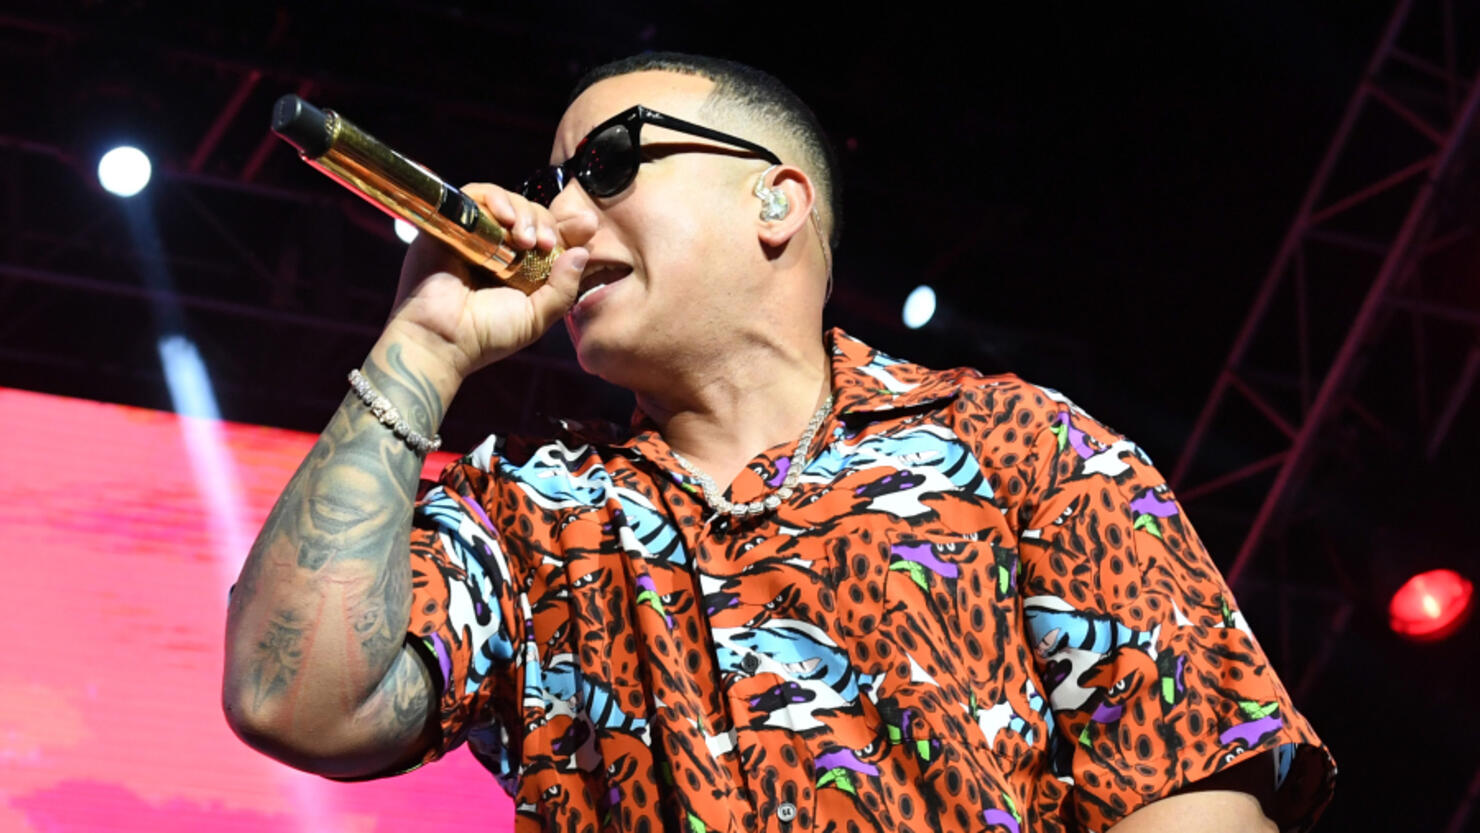 Daddy Yankee to focus on Christian faith after reggaeton retirement